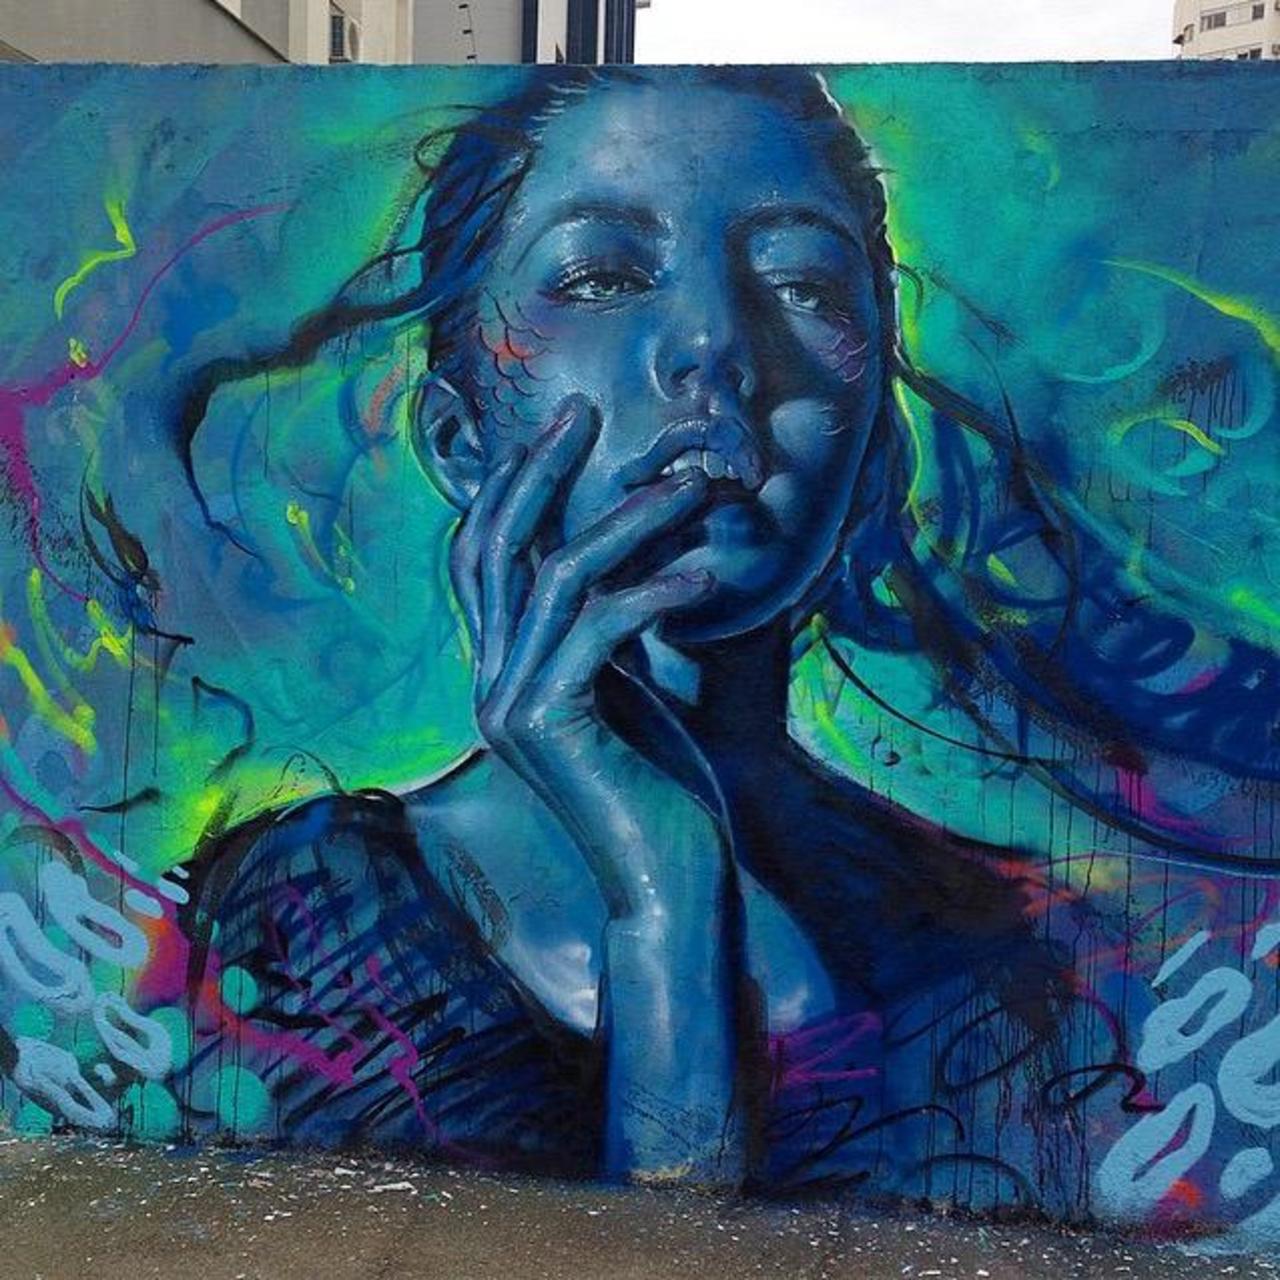 Thiago Valdi new Street Art piece titled 'Day Dreamer' #art #mural #graffiti #streetart http://t.co/3UodbQm48I …… http://twitter.com/charlesjackso14/status/652728474596208640